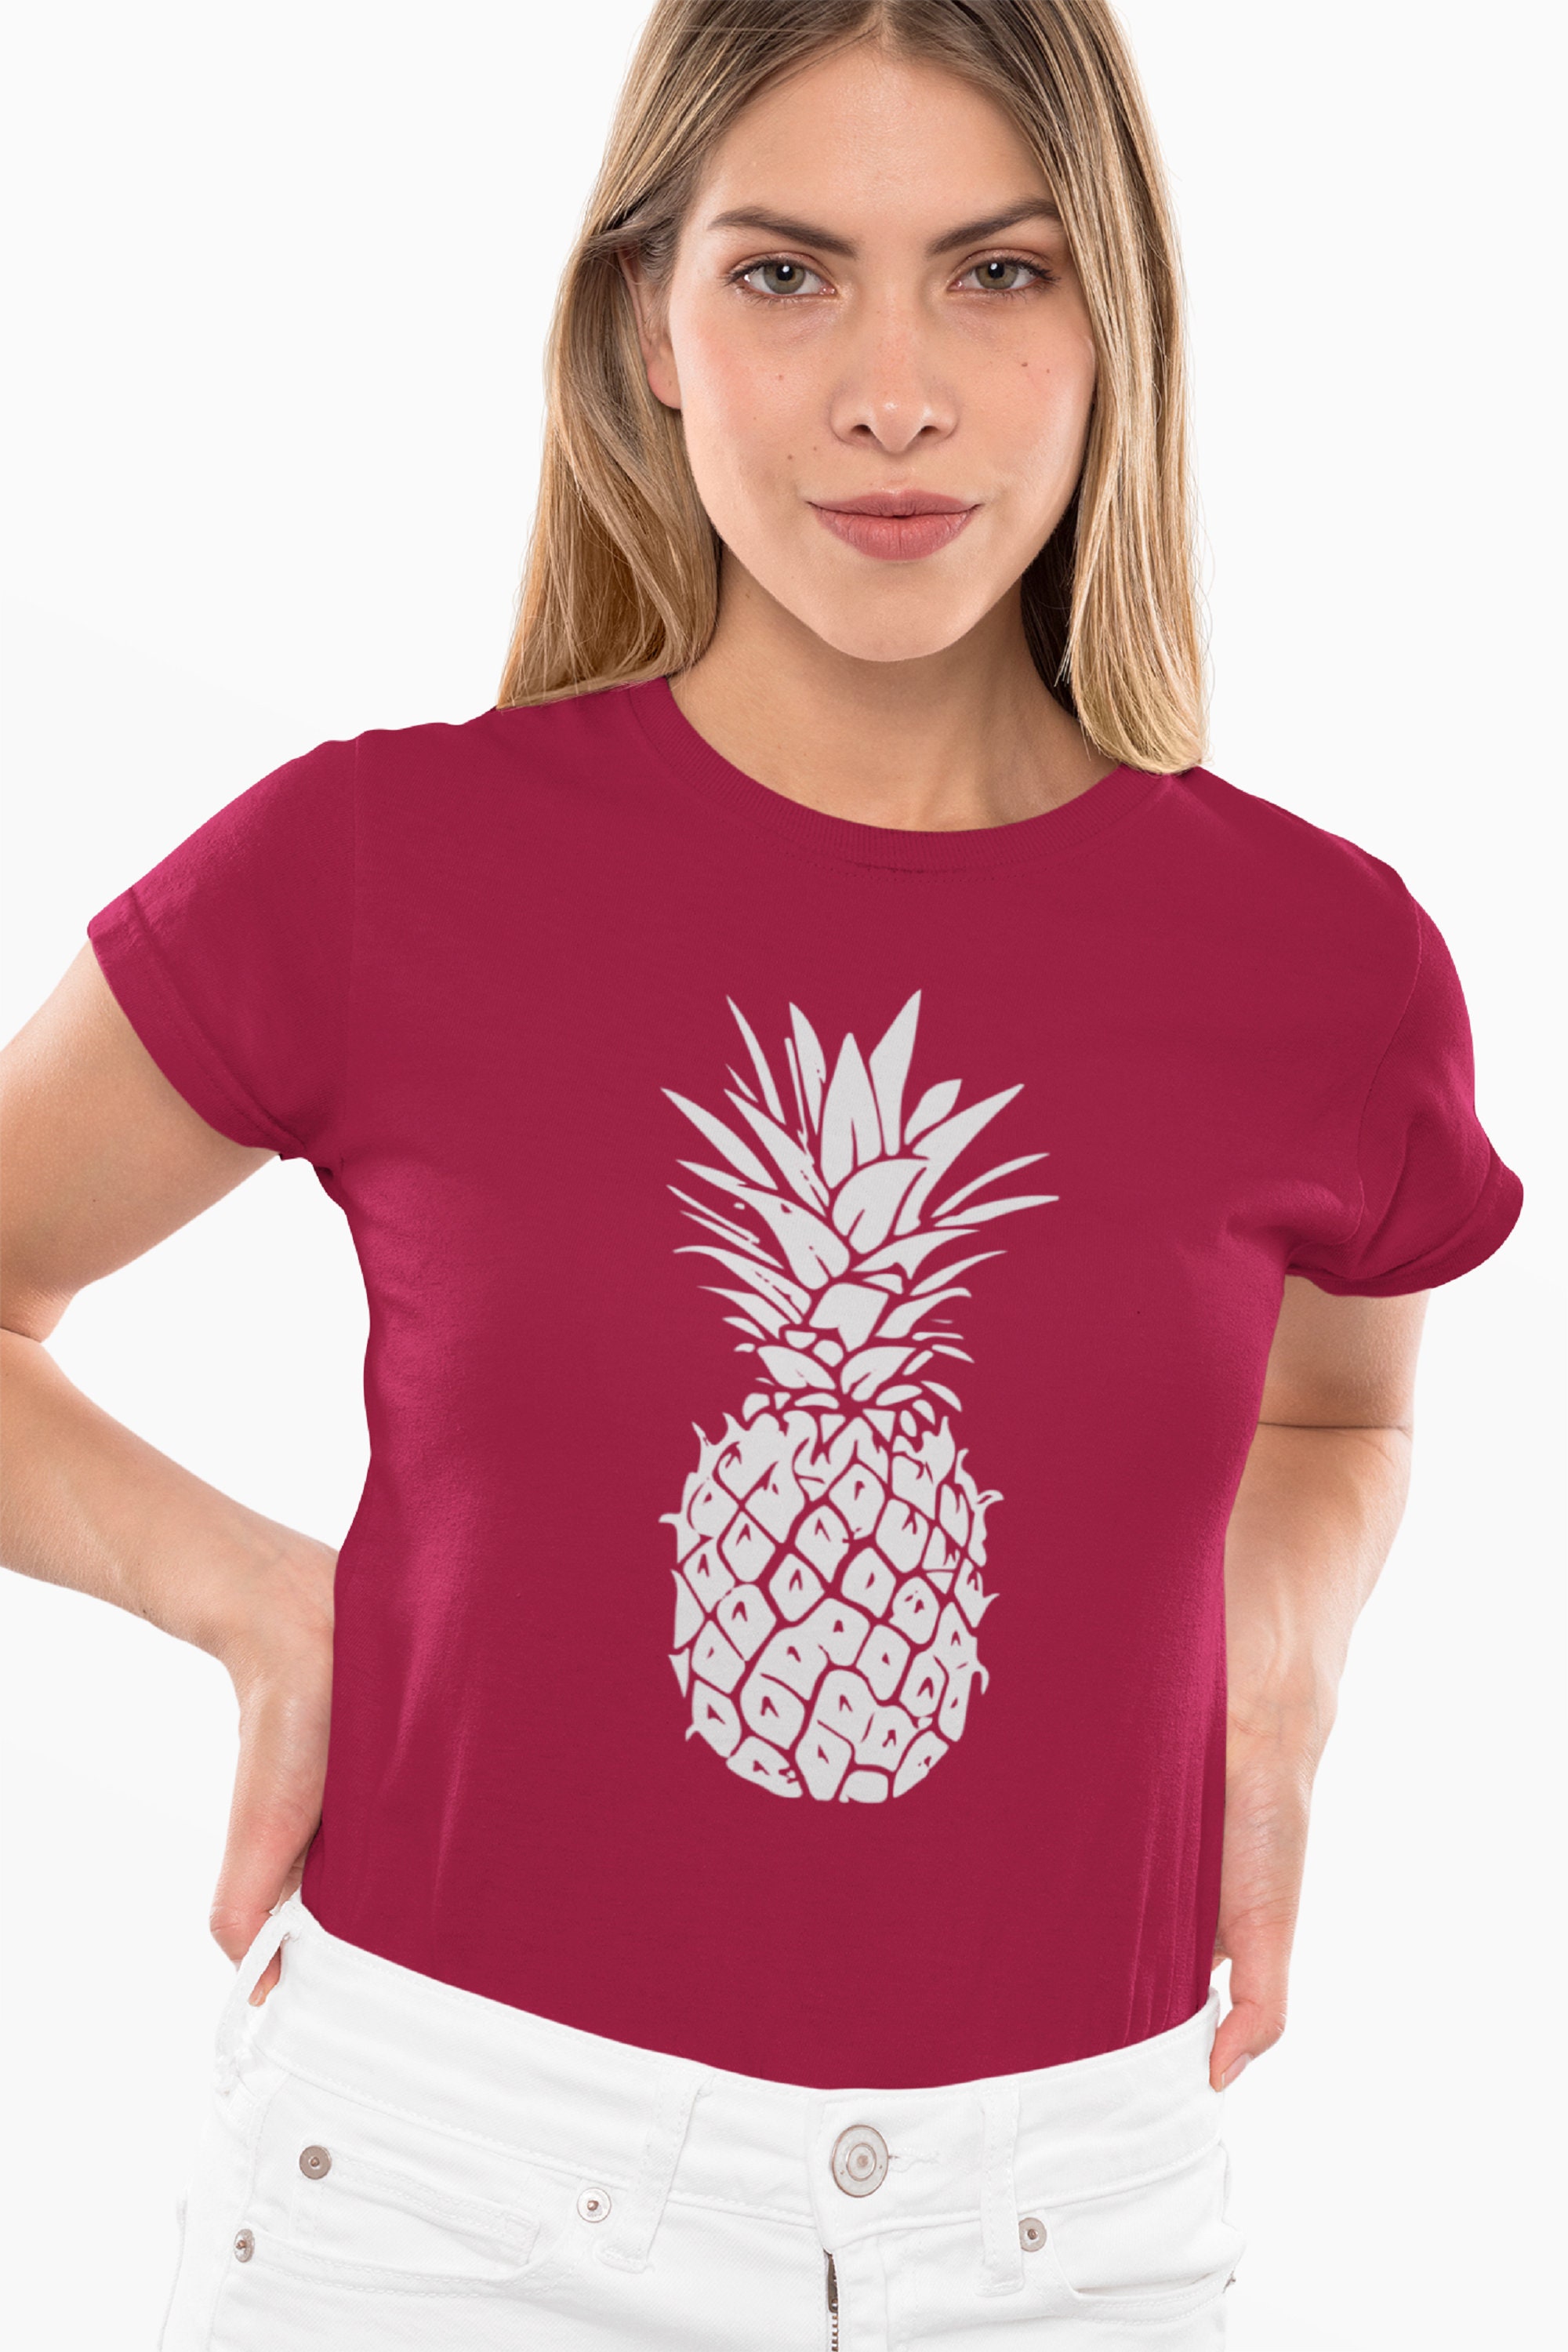 Pineapple Shirt Women Graphic Tees Summer Women Shirt Crew | Etsy